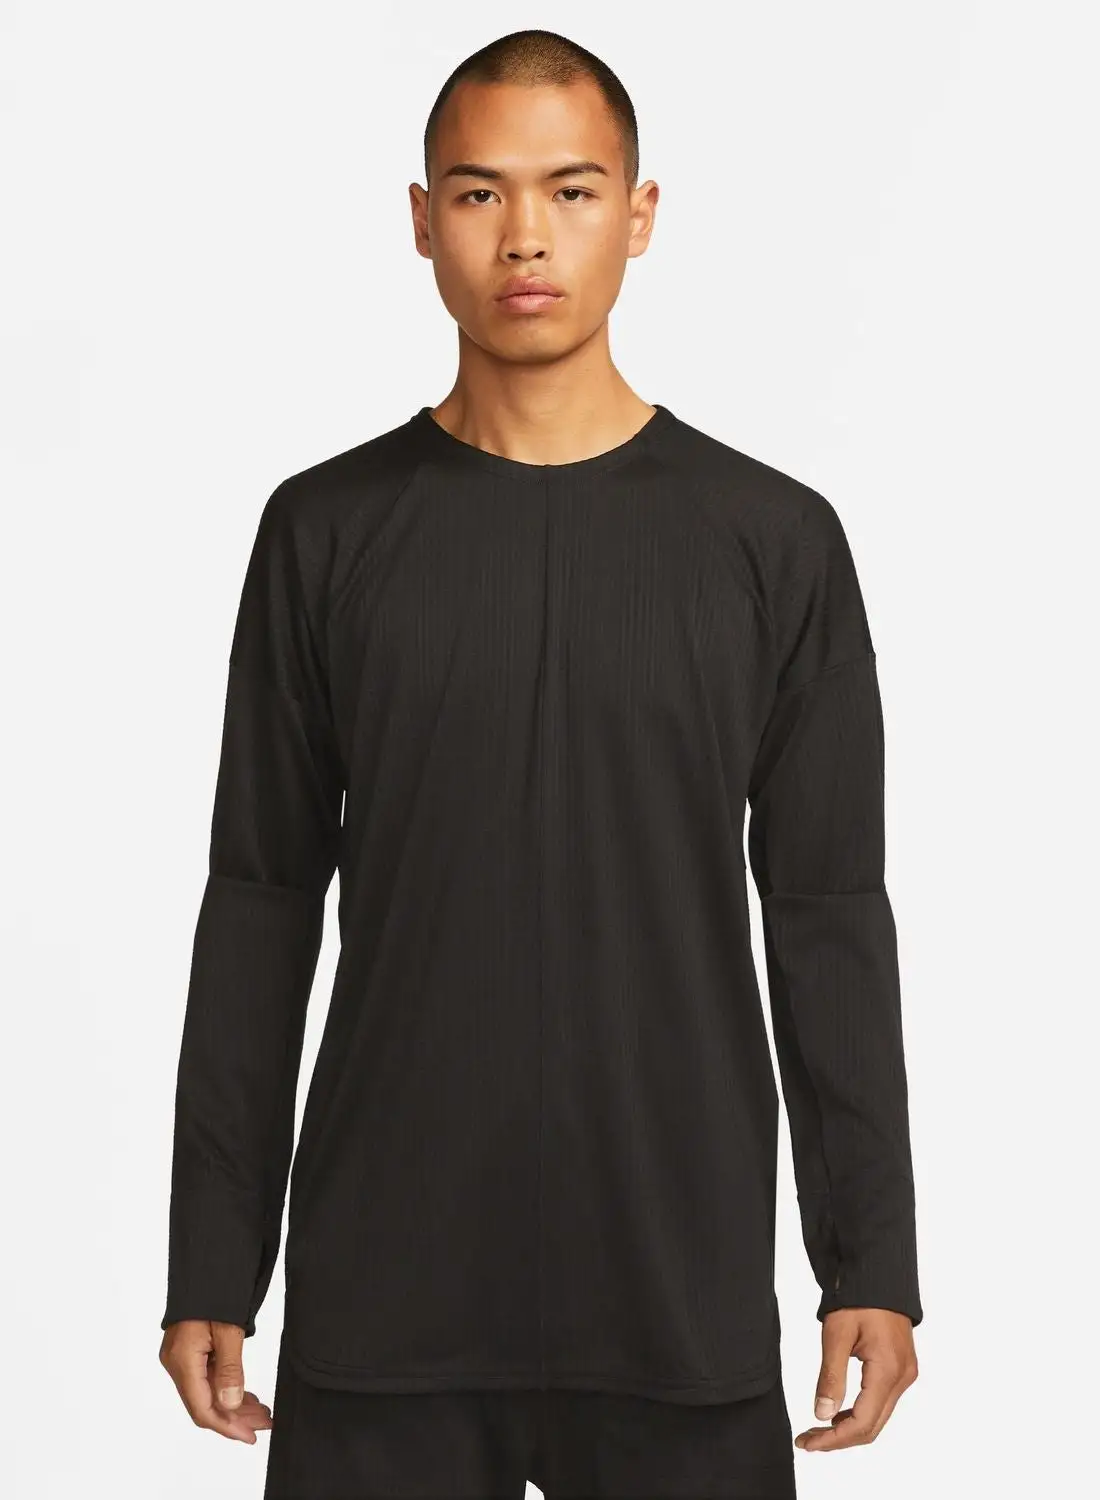 Nike Dri-Fit Statement Jersey Sweatshirt